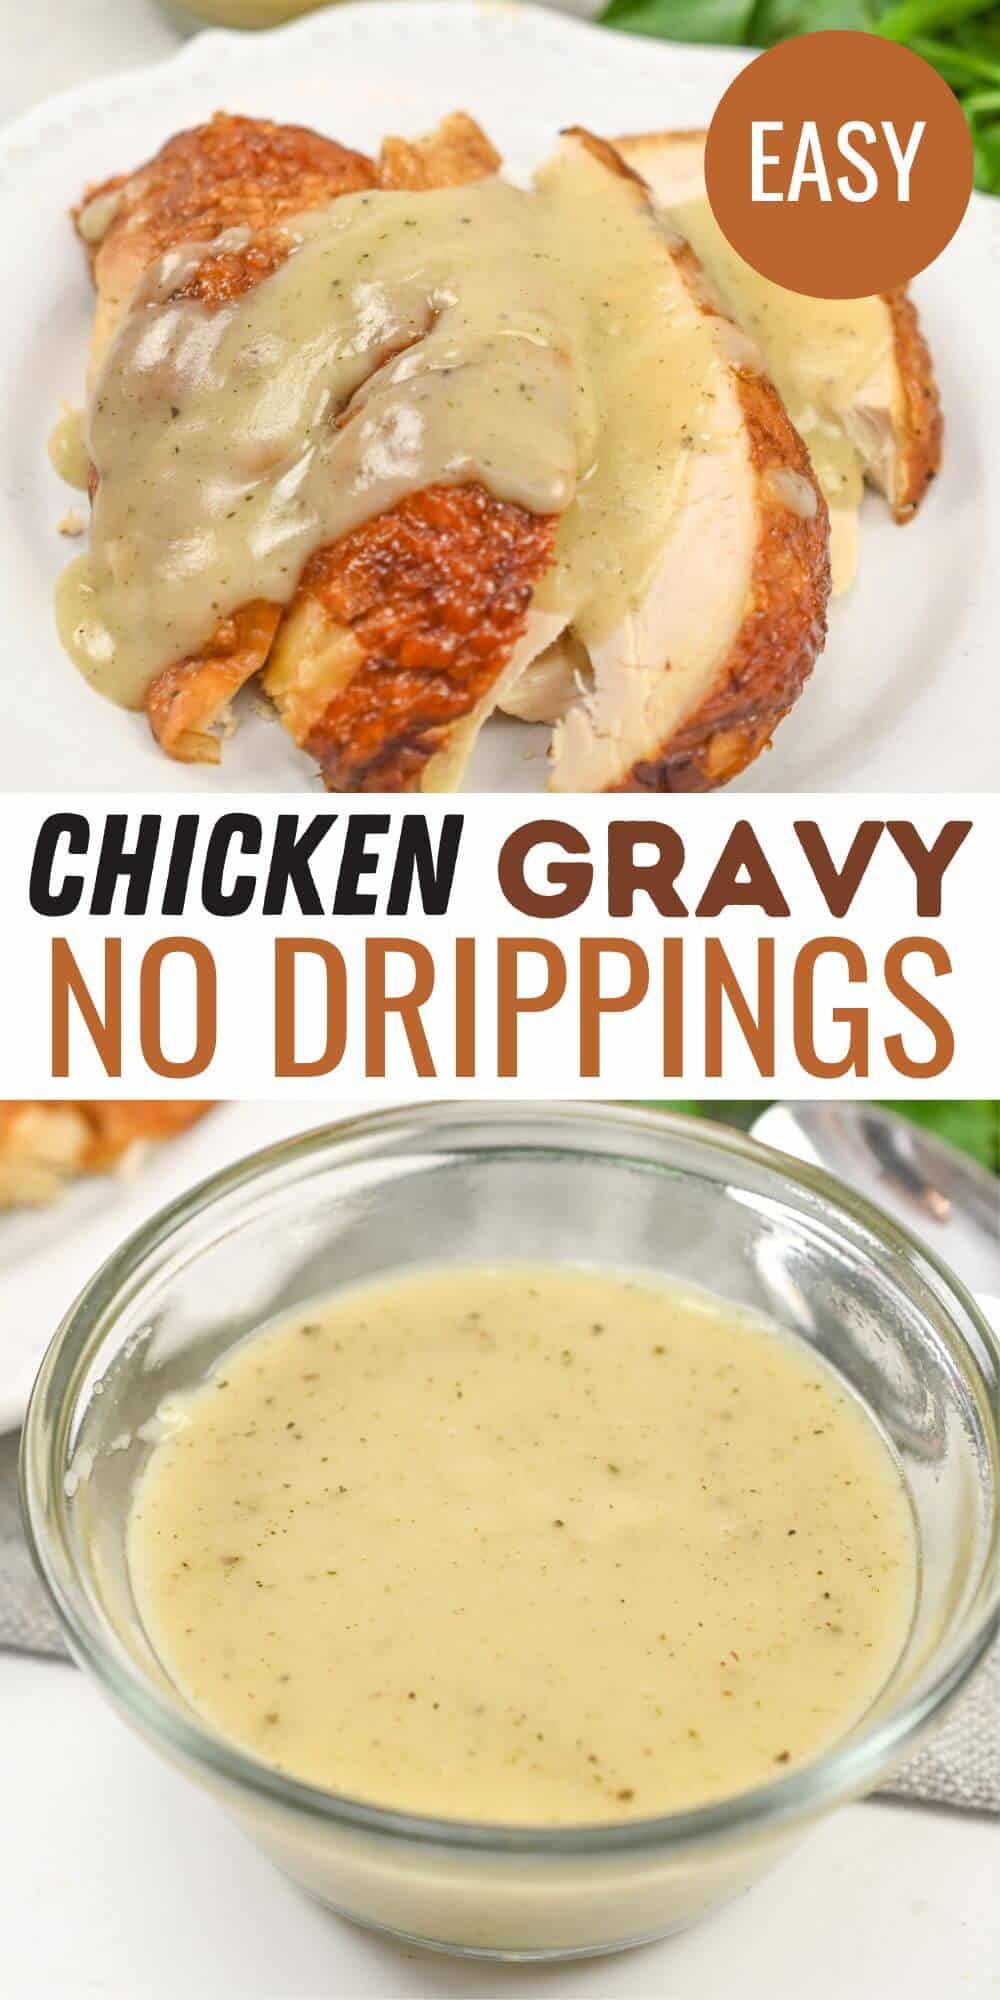 Easy chicken gravy no dippings.